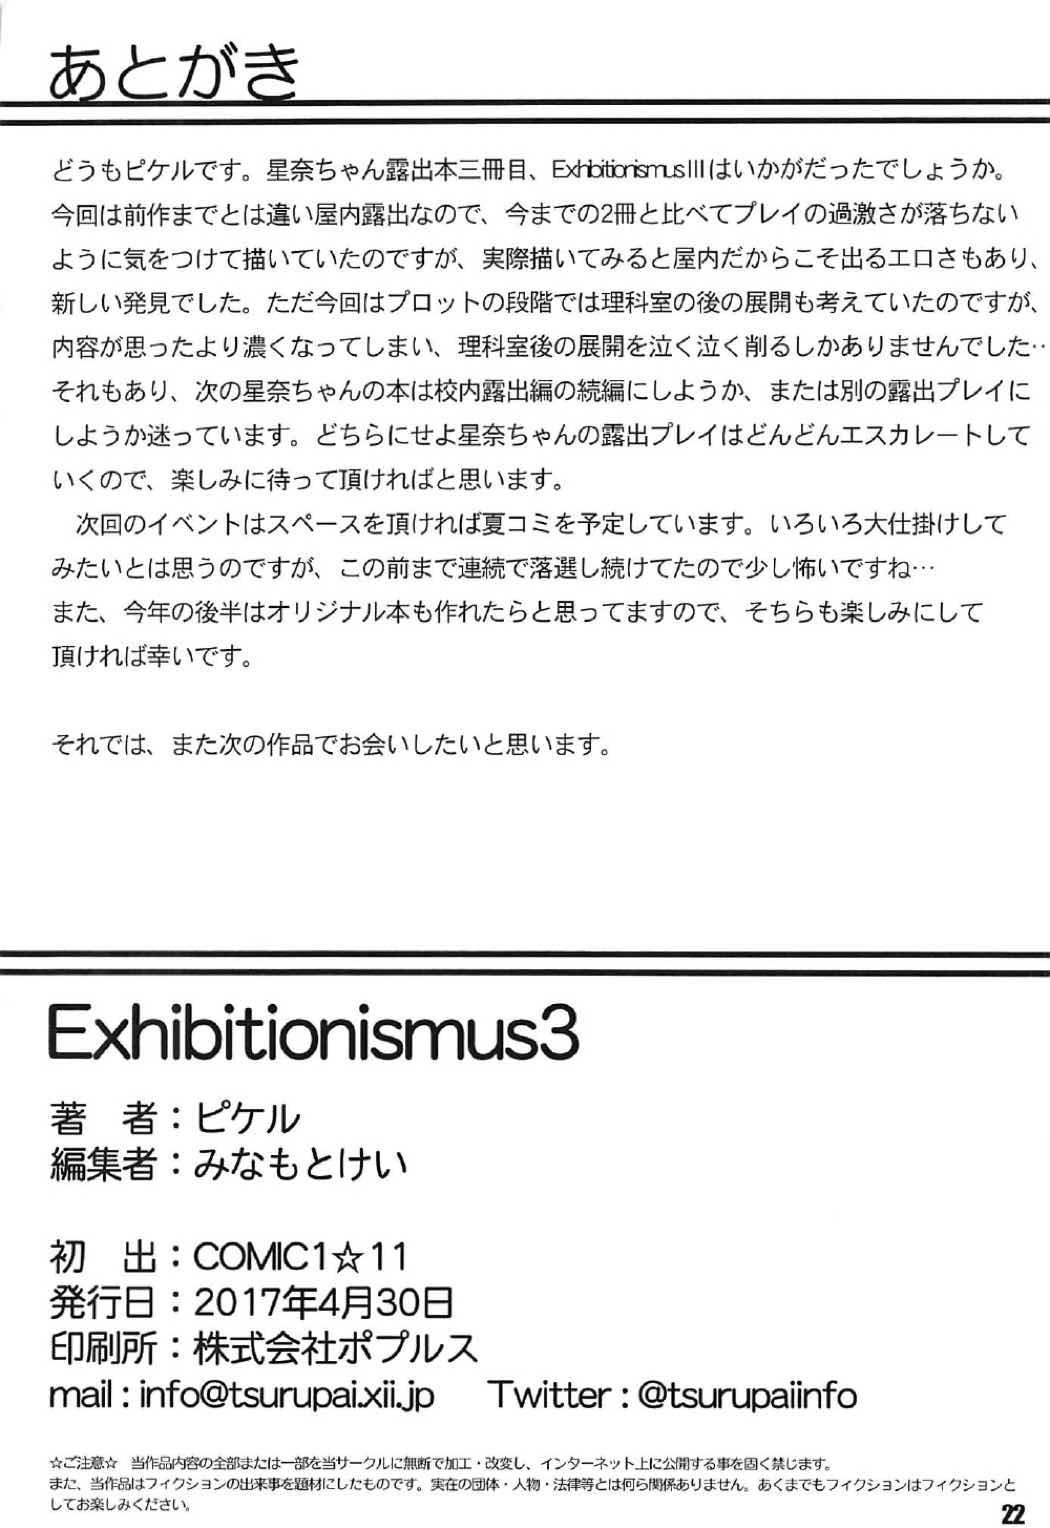 Exhibitionismus3 20